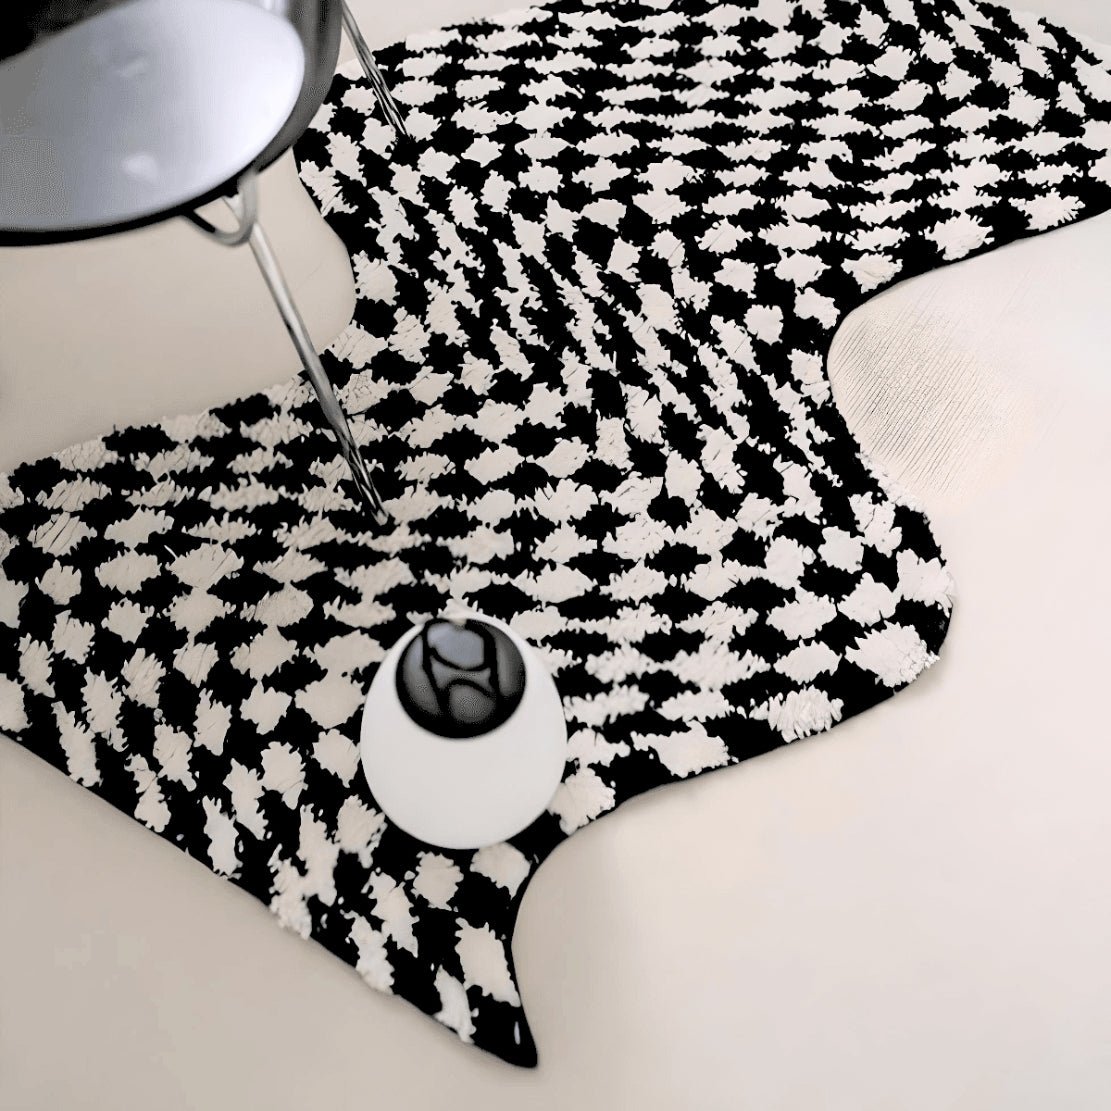 Black white checkerboard wavy floor rug